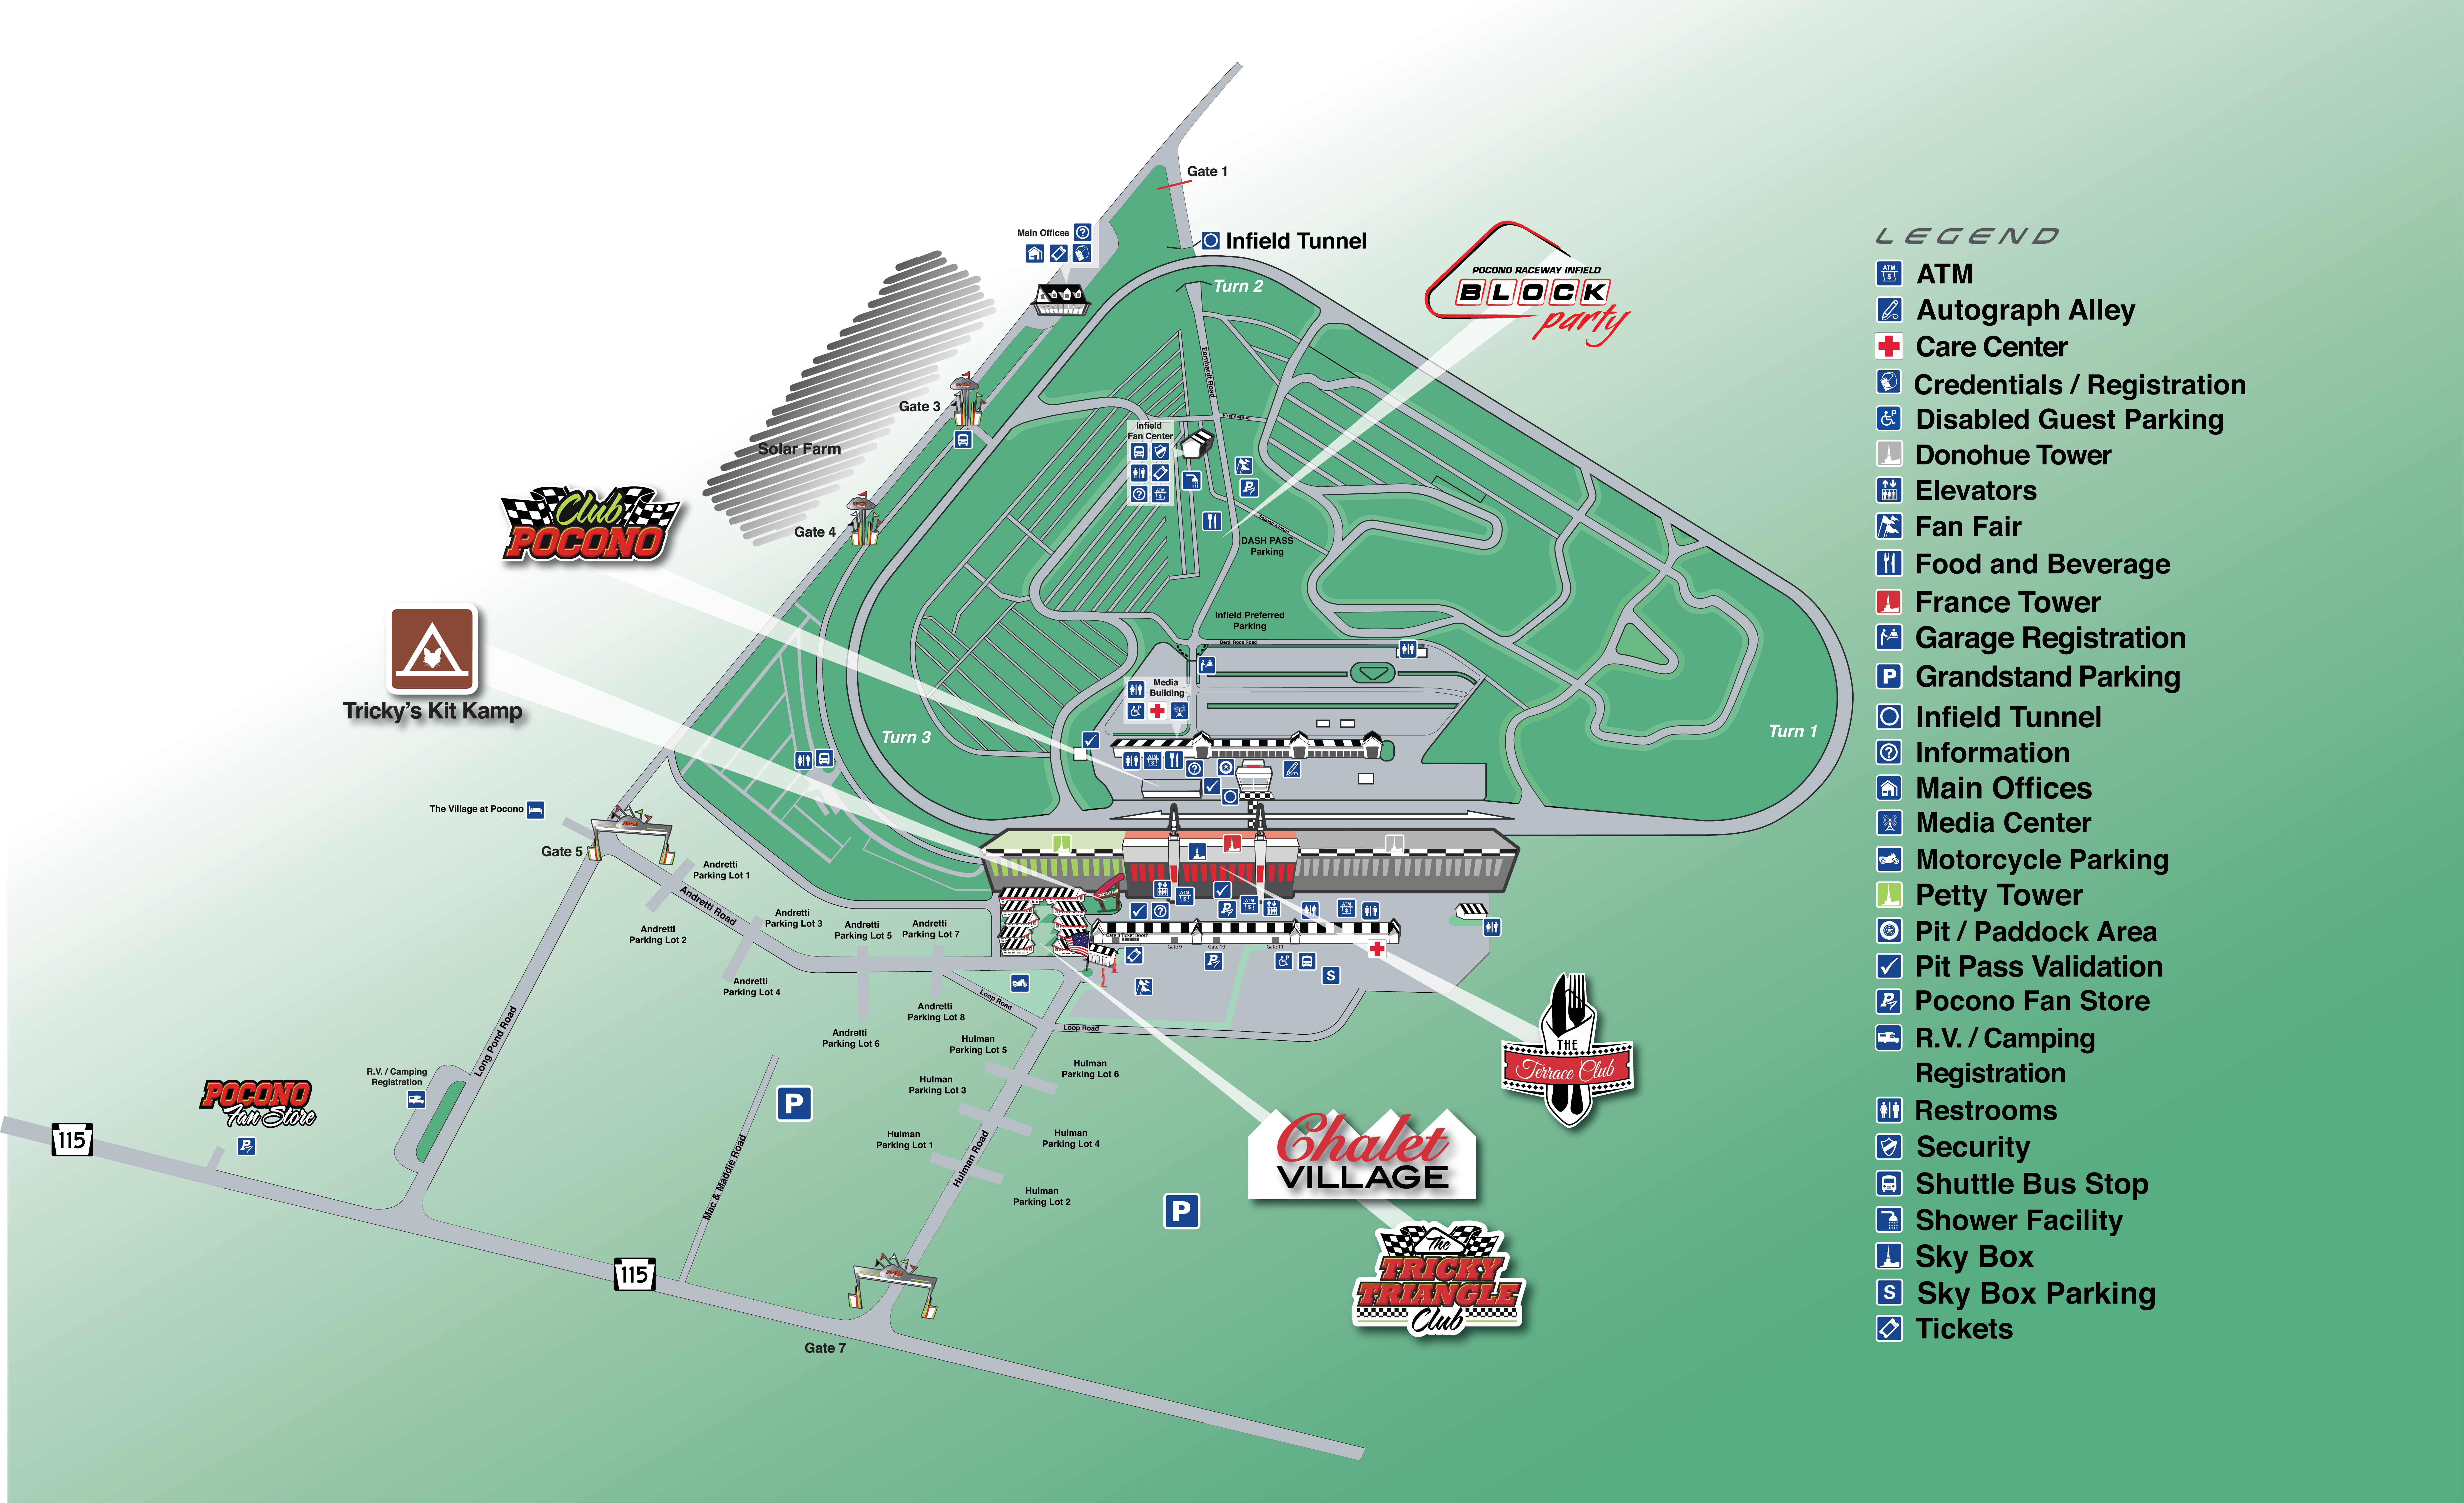 Pocono Raceway Long Pond Seating Chart